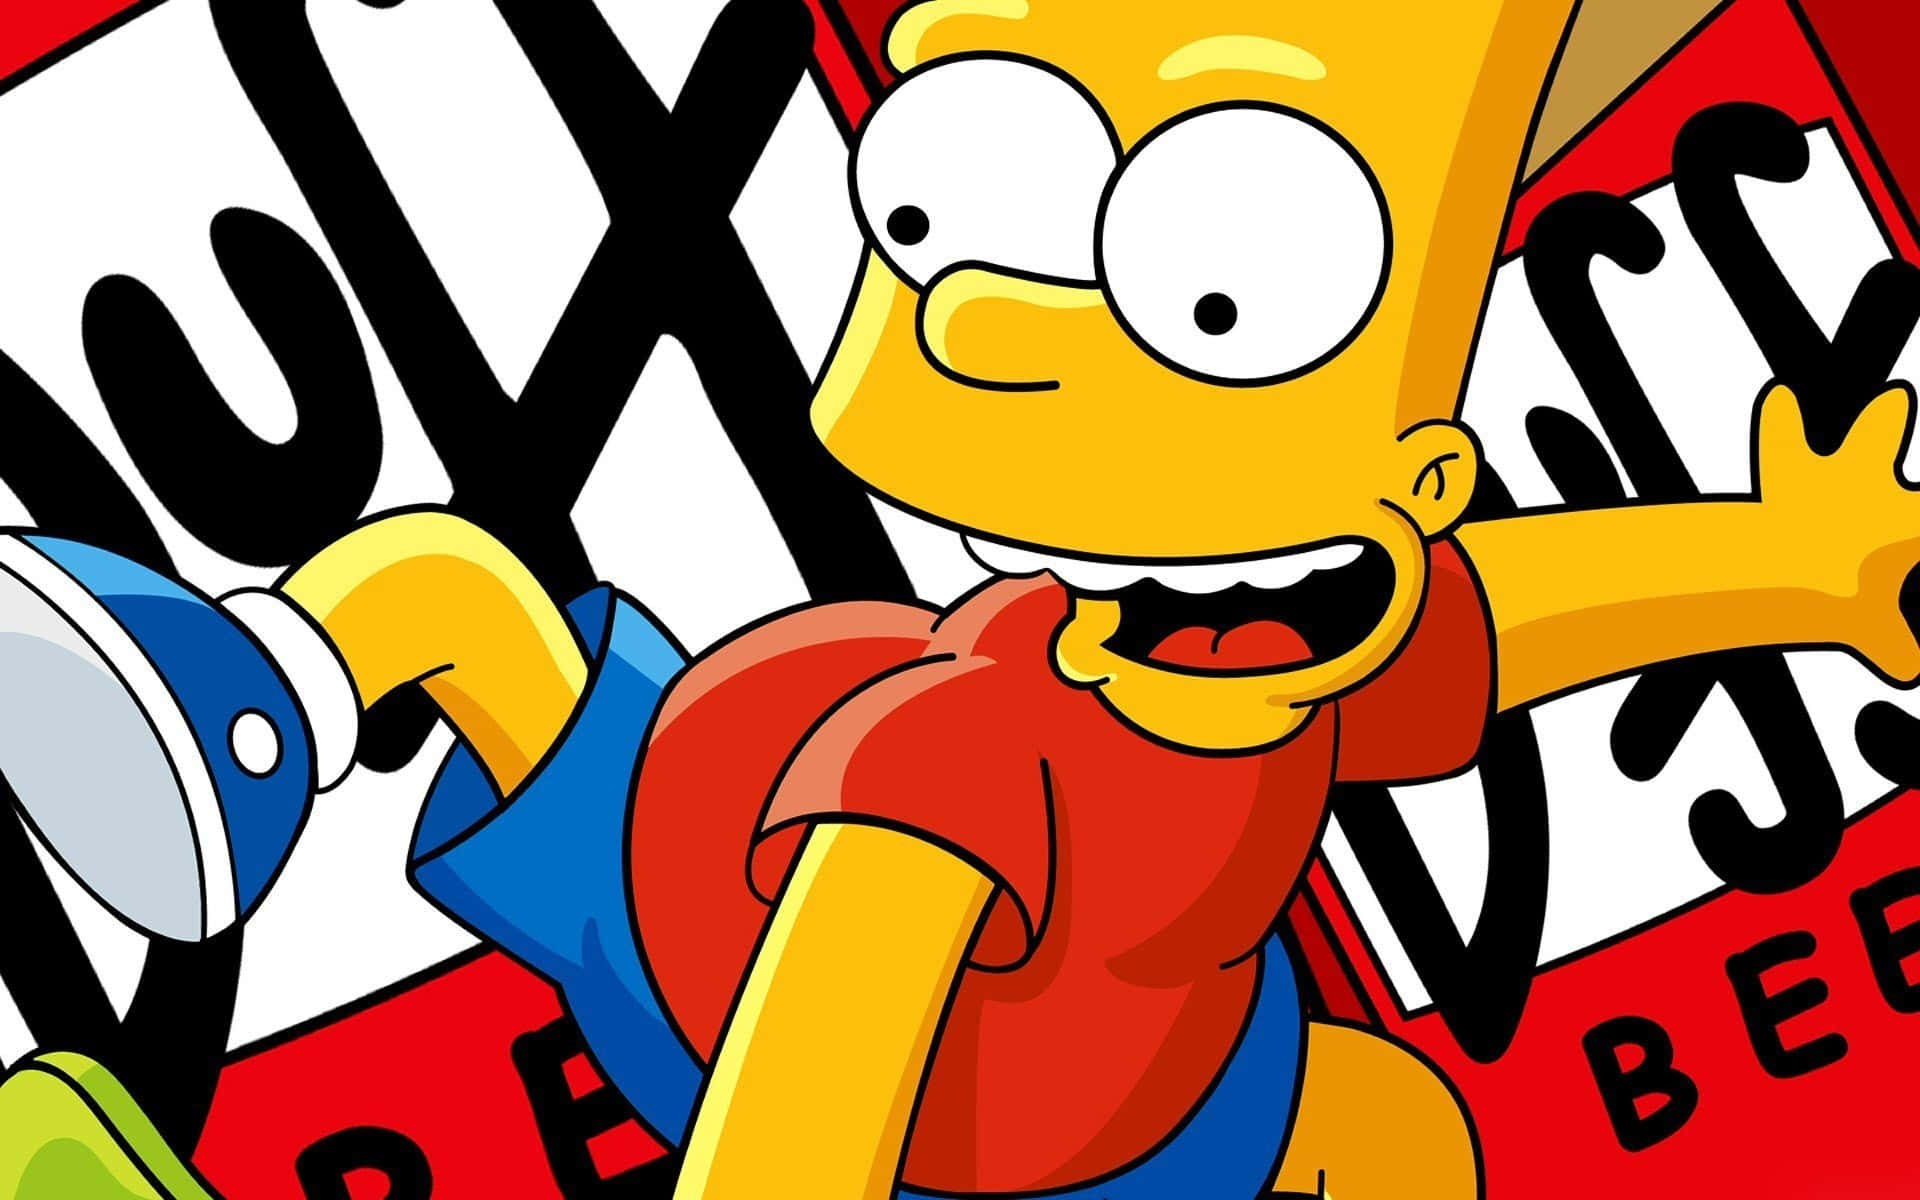 A cartoon character is skateboarding on the ground - Bart Simpson